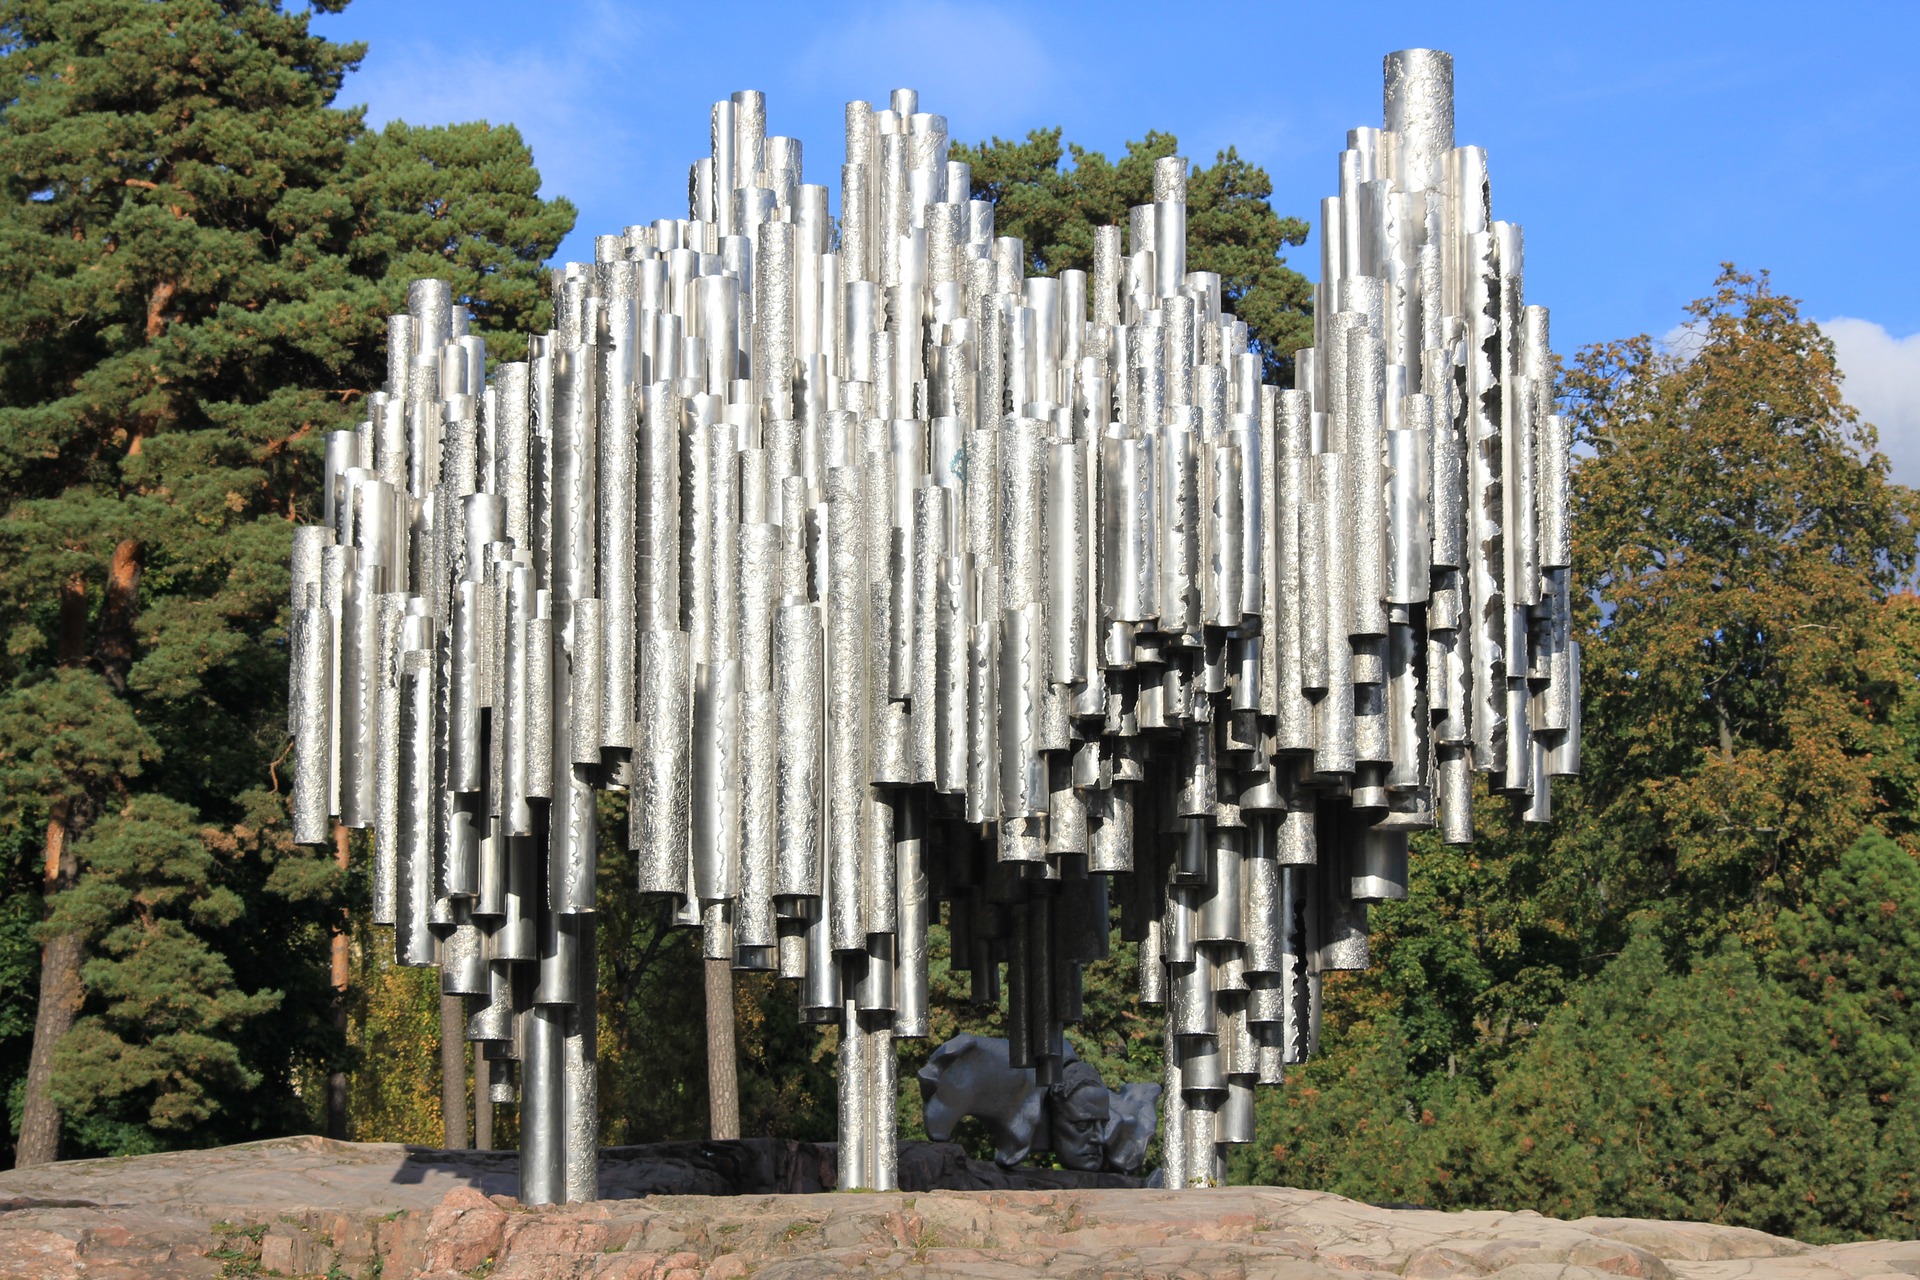 Sibelius Monument by anneileino on Pixabay